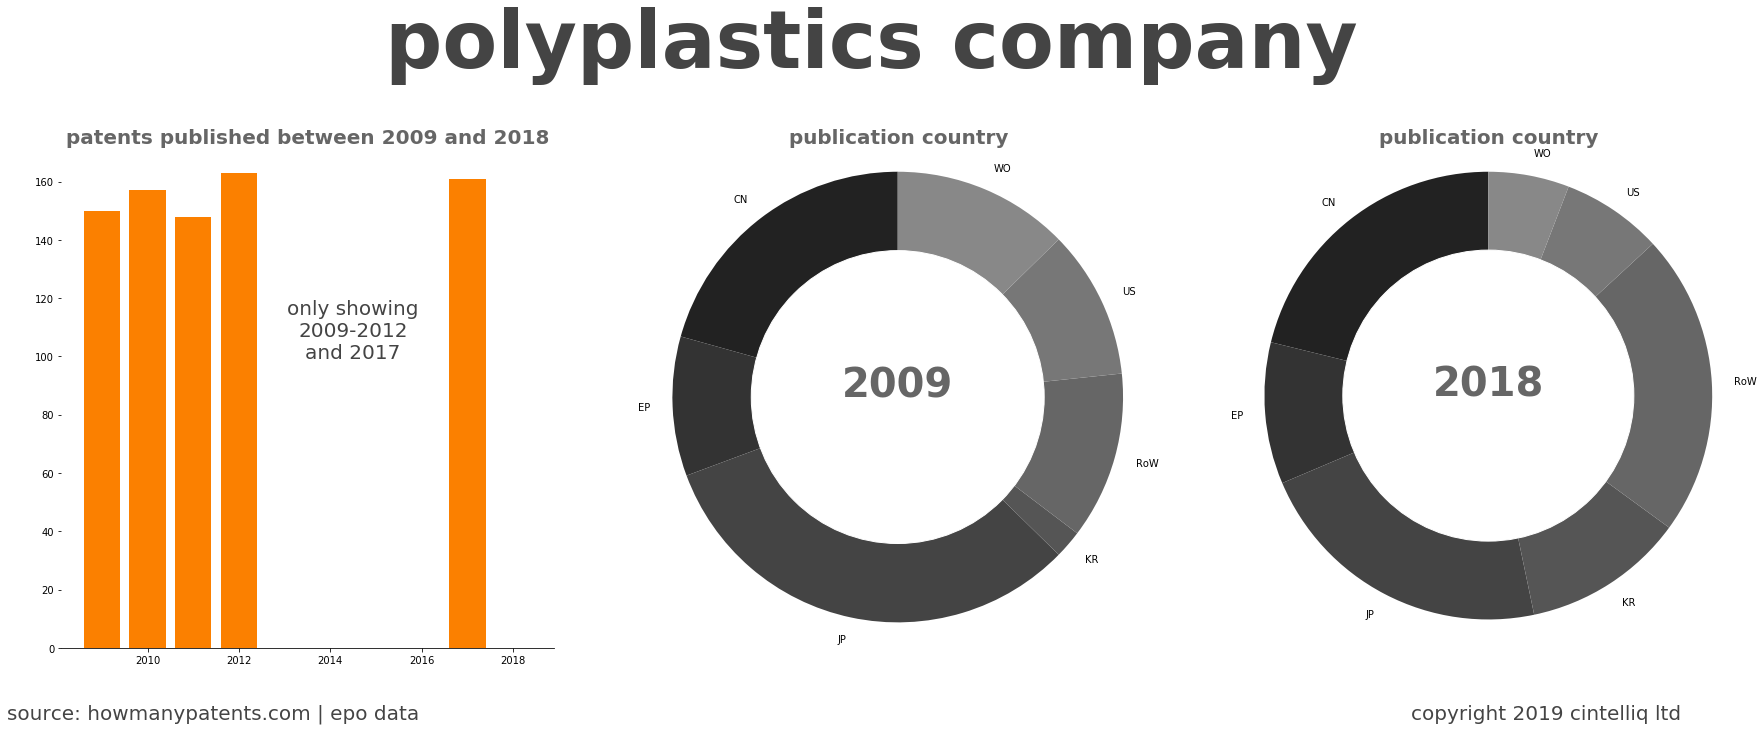 summary of patents for Polyplastics Company